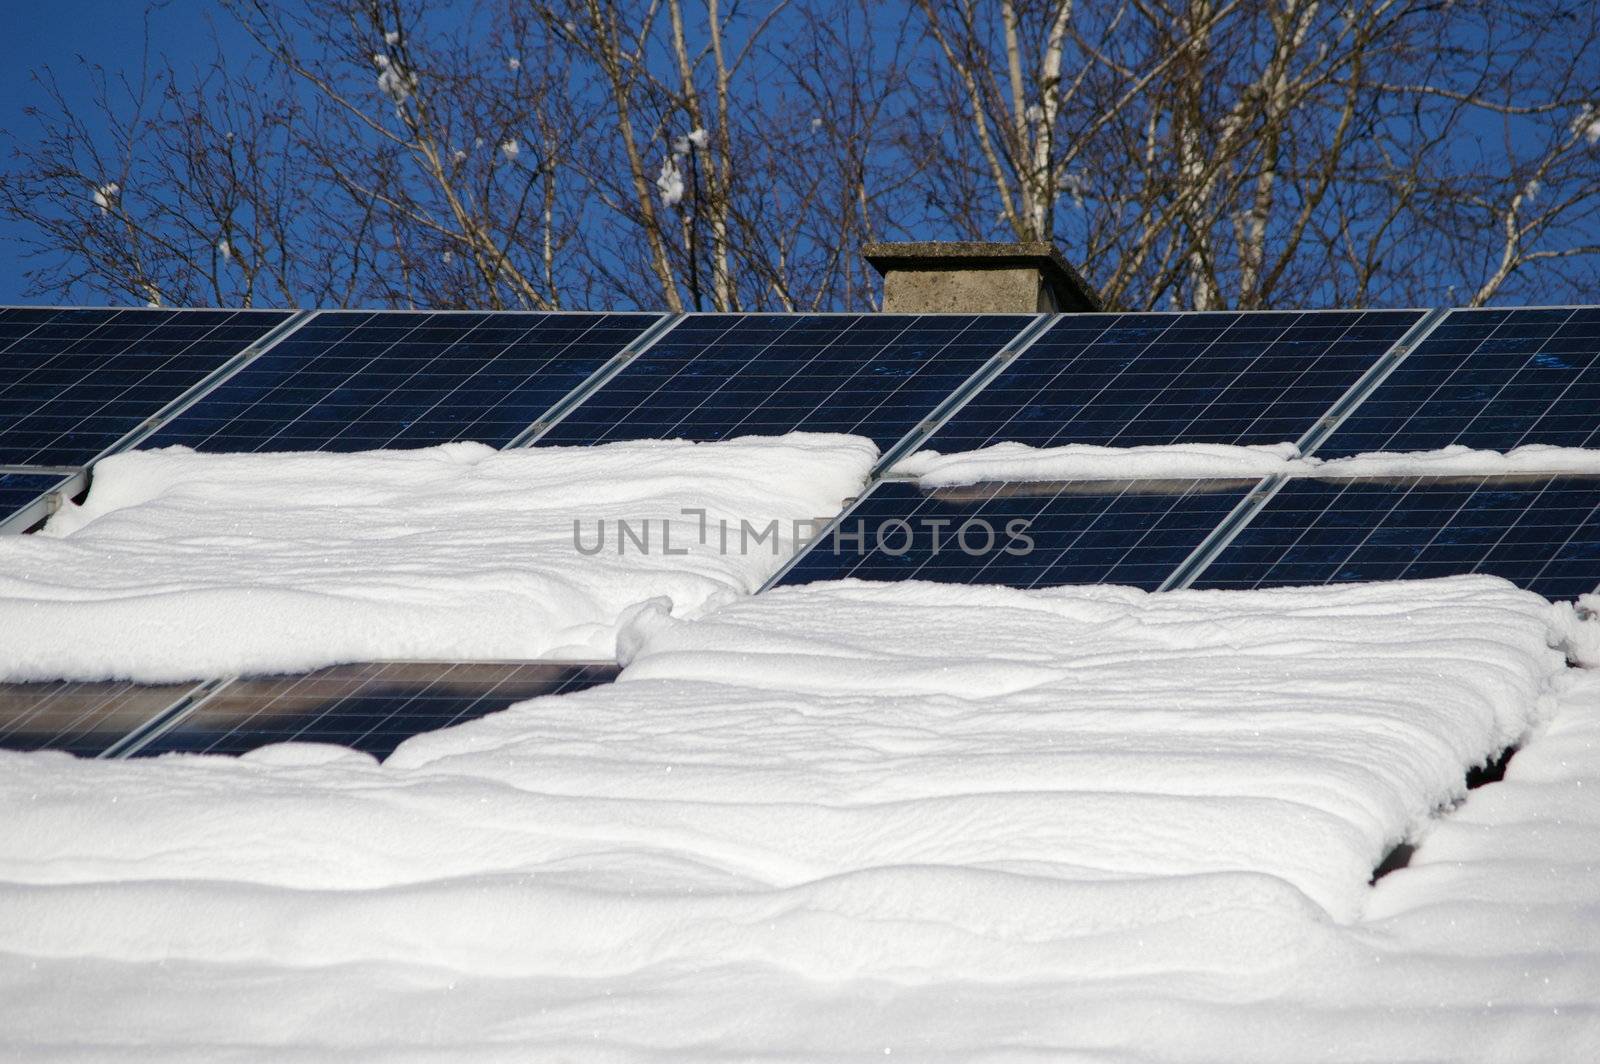 solar cells on a snowy roof